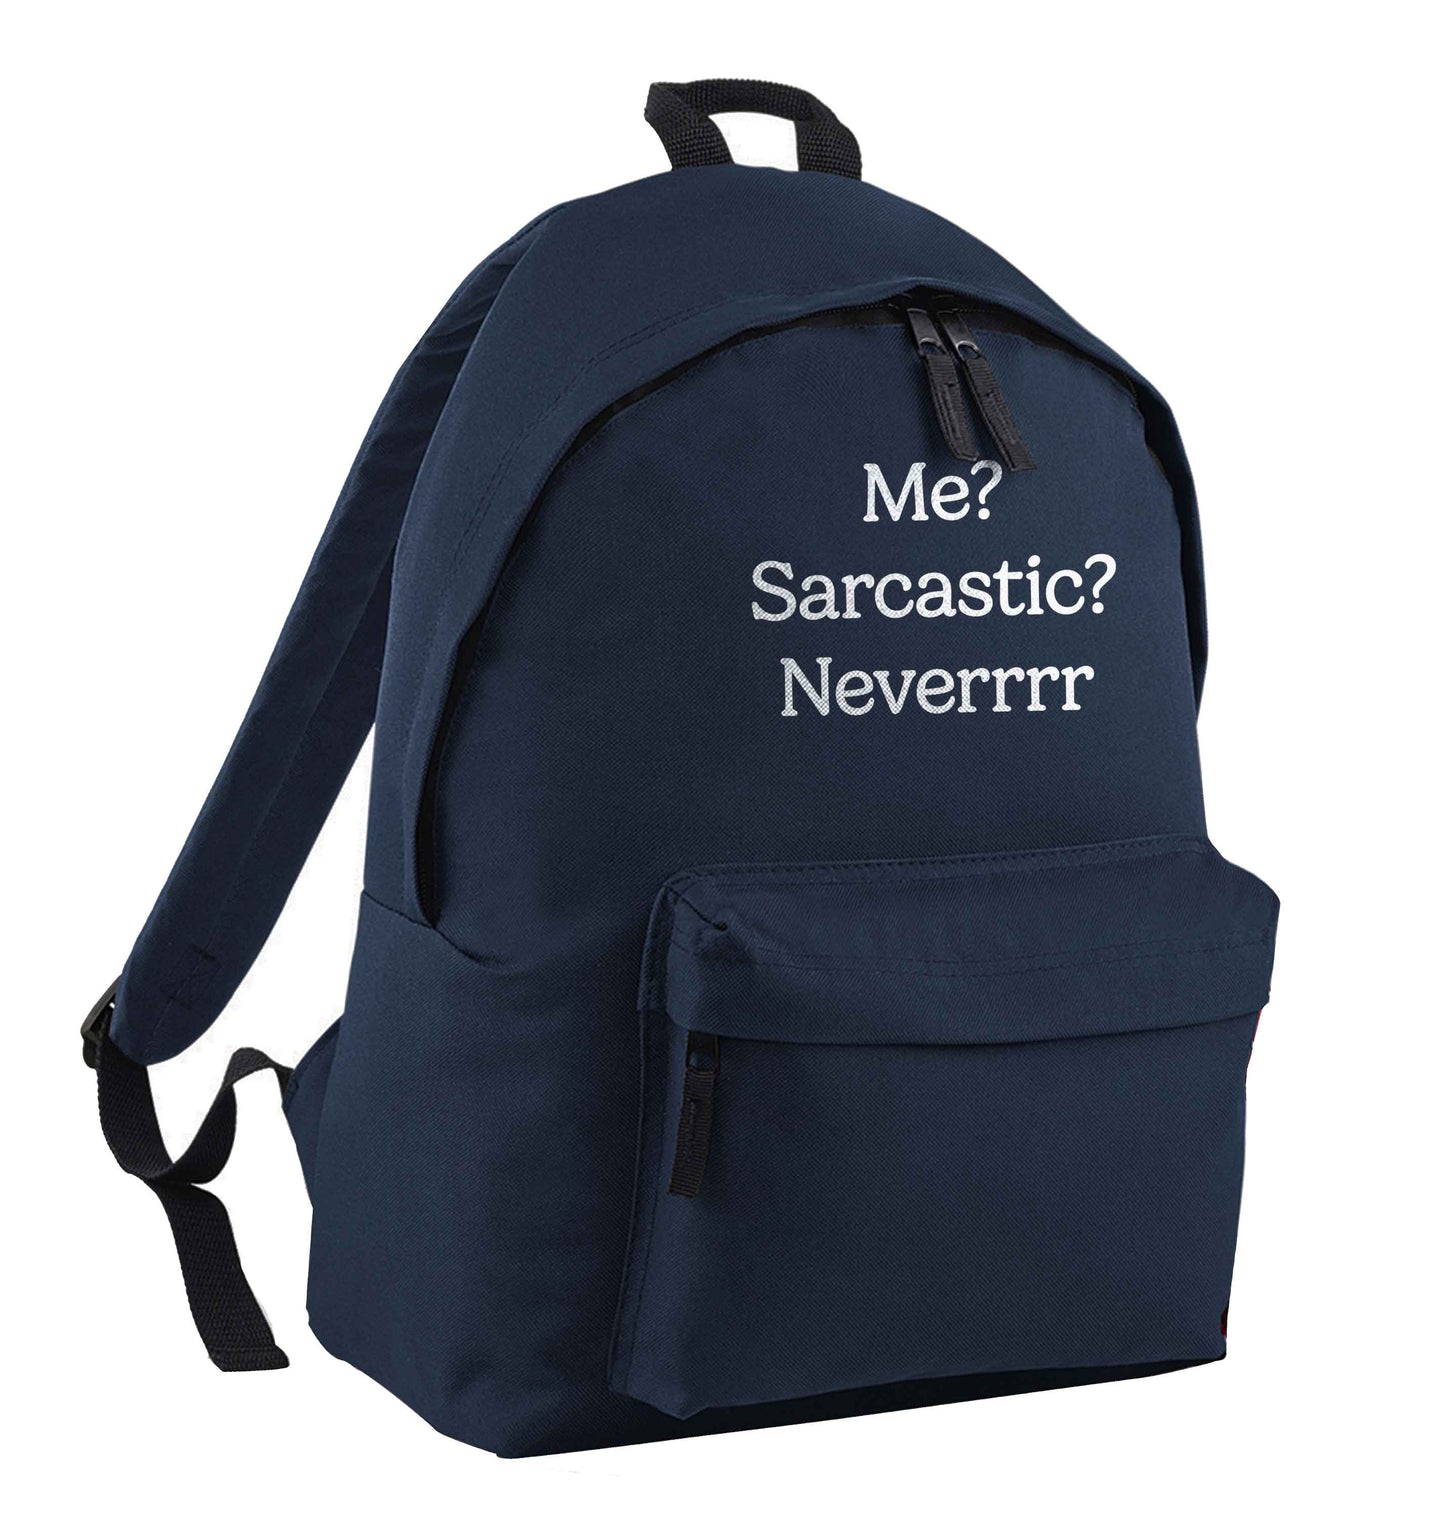 Me? sarcastic? never navy children's backpack